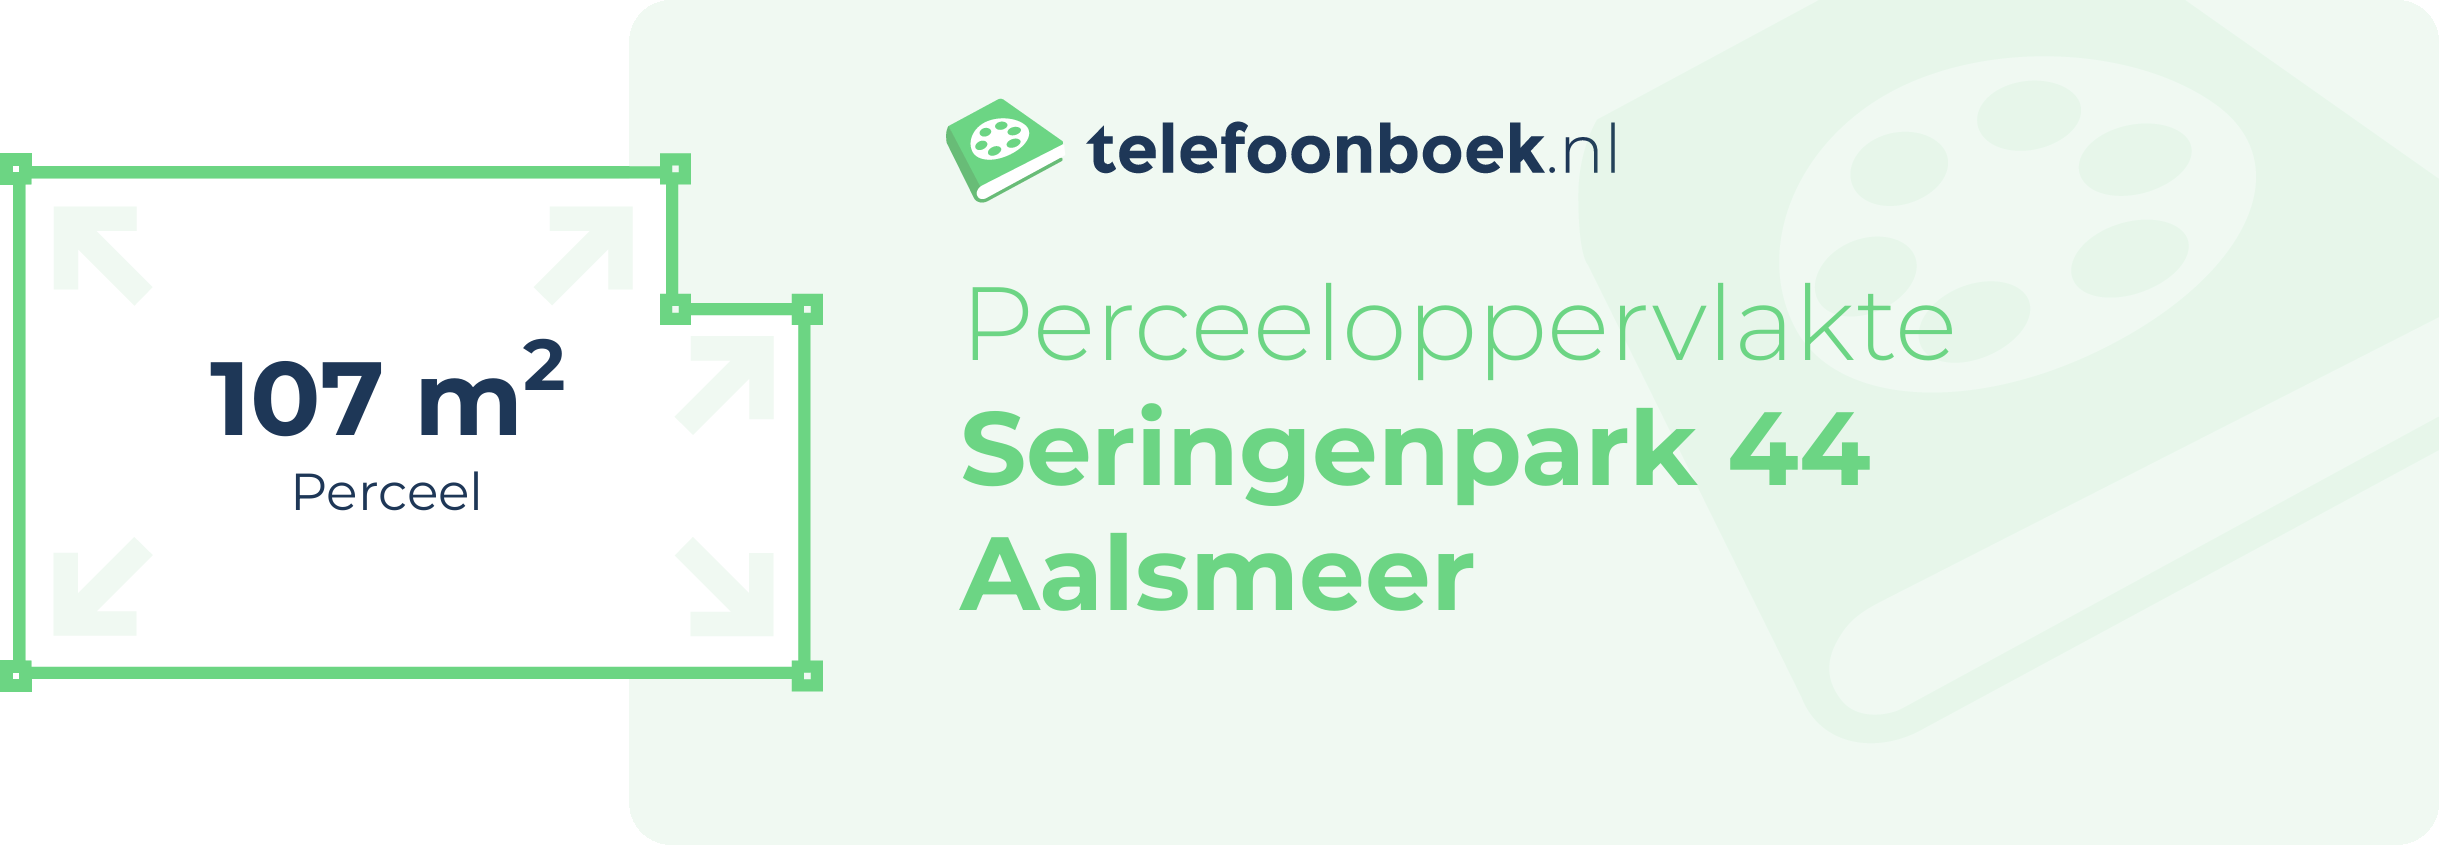 Perceeloppervlakte Seringenpark 44 Aalsmeer